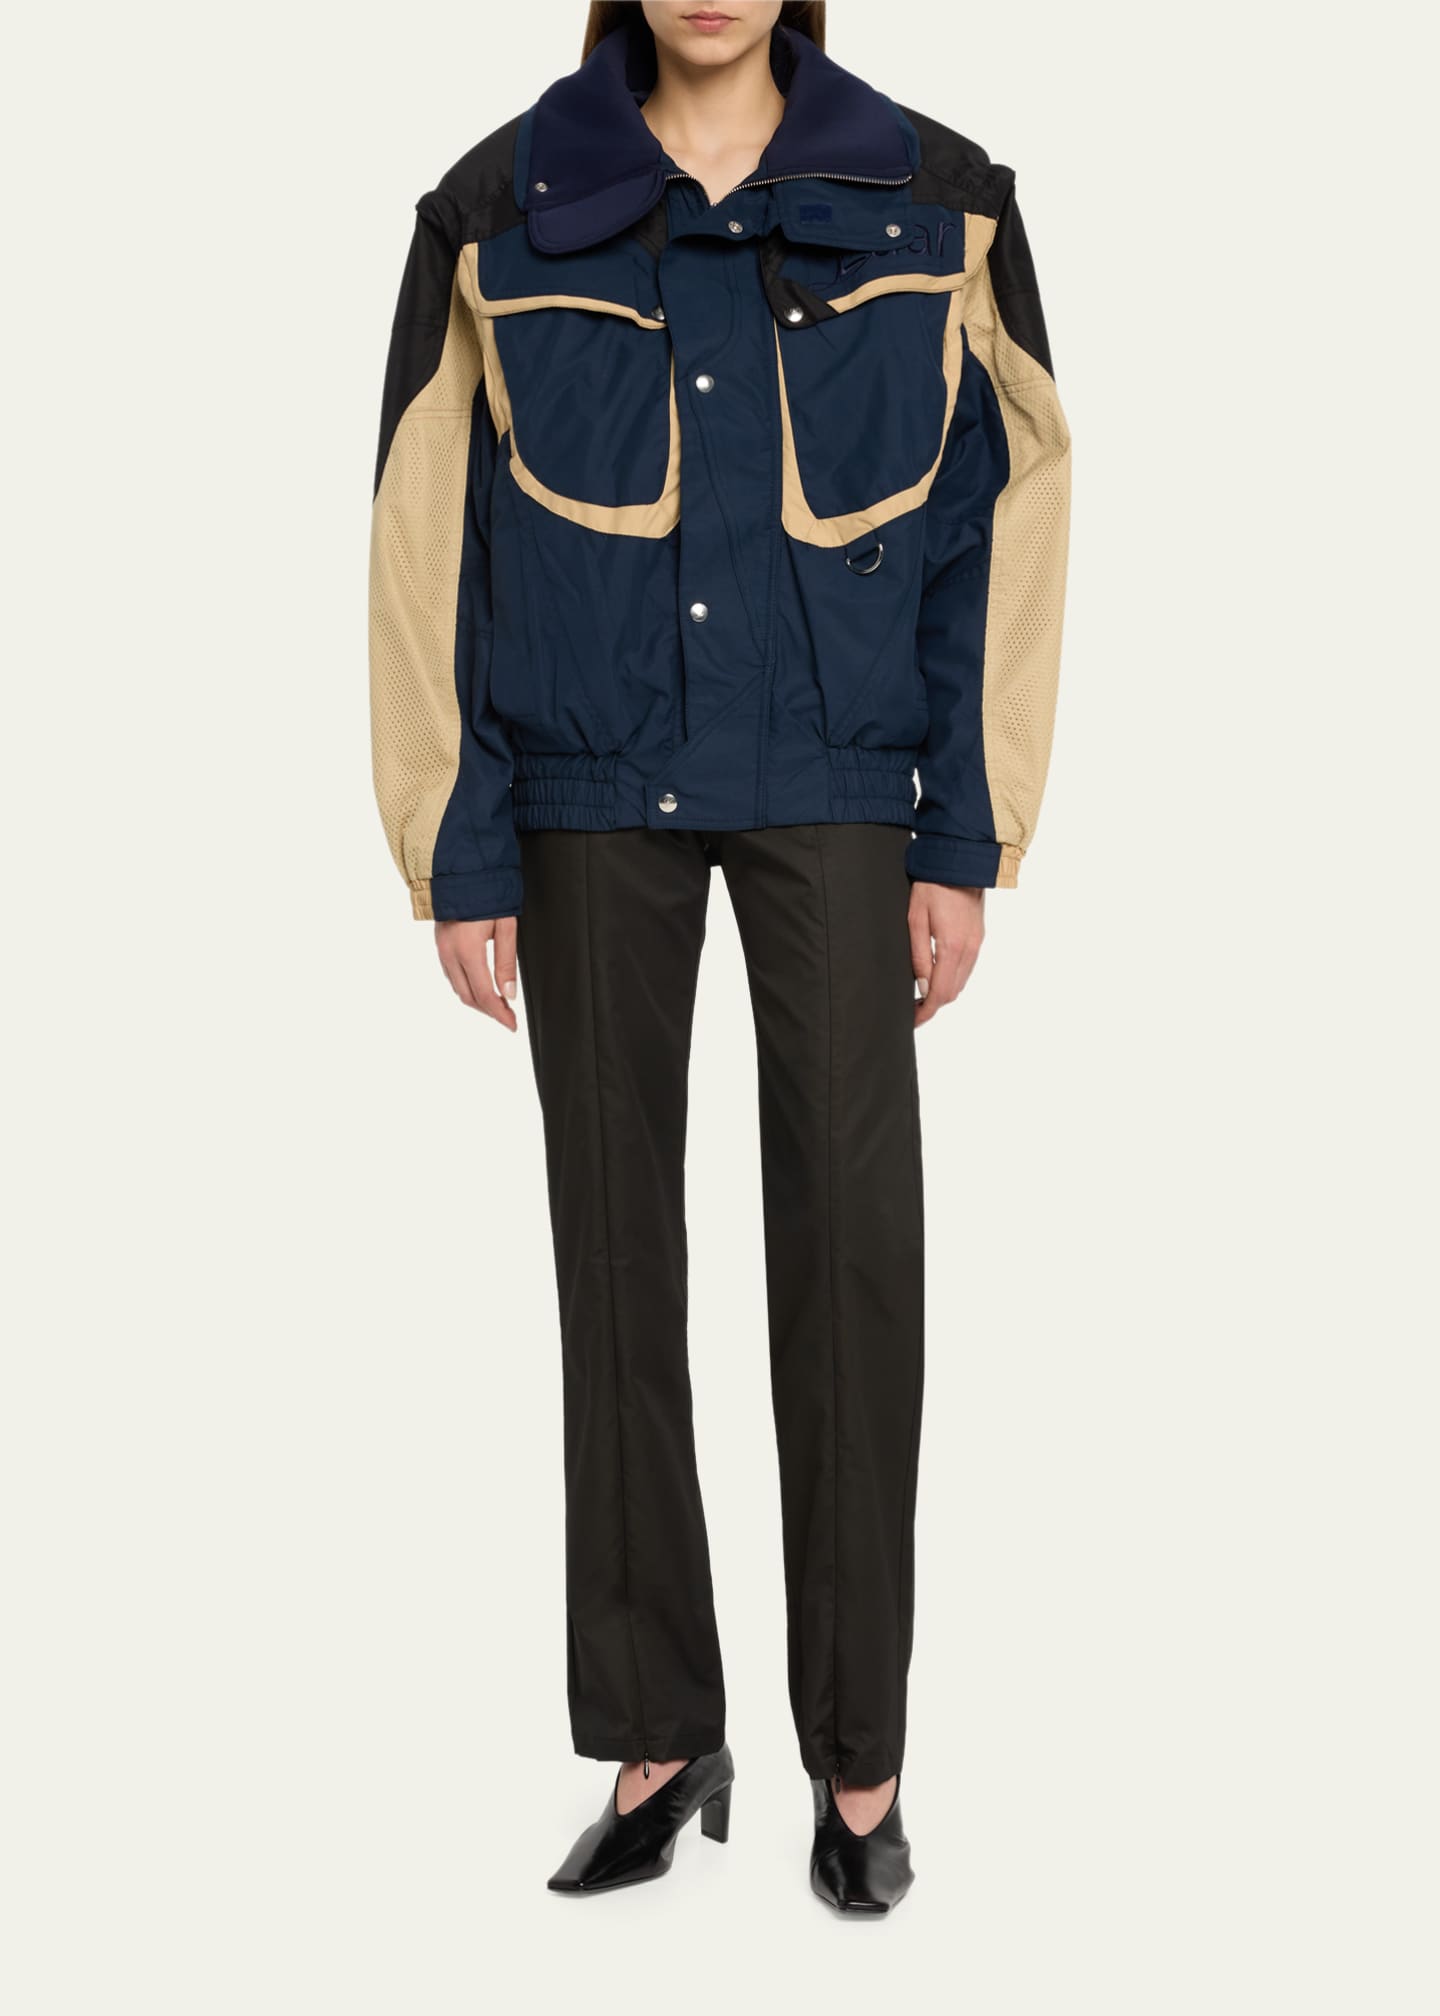 Gucci Men's Tricolor Hooded Bomber Jacket - Bergdorf Goodman